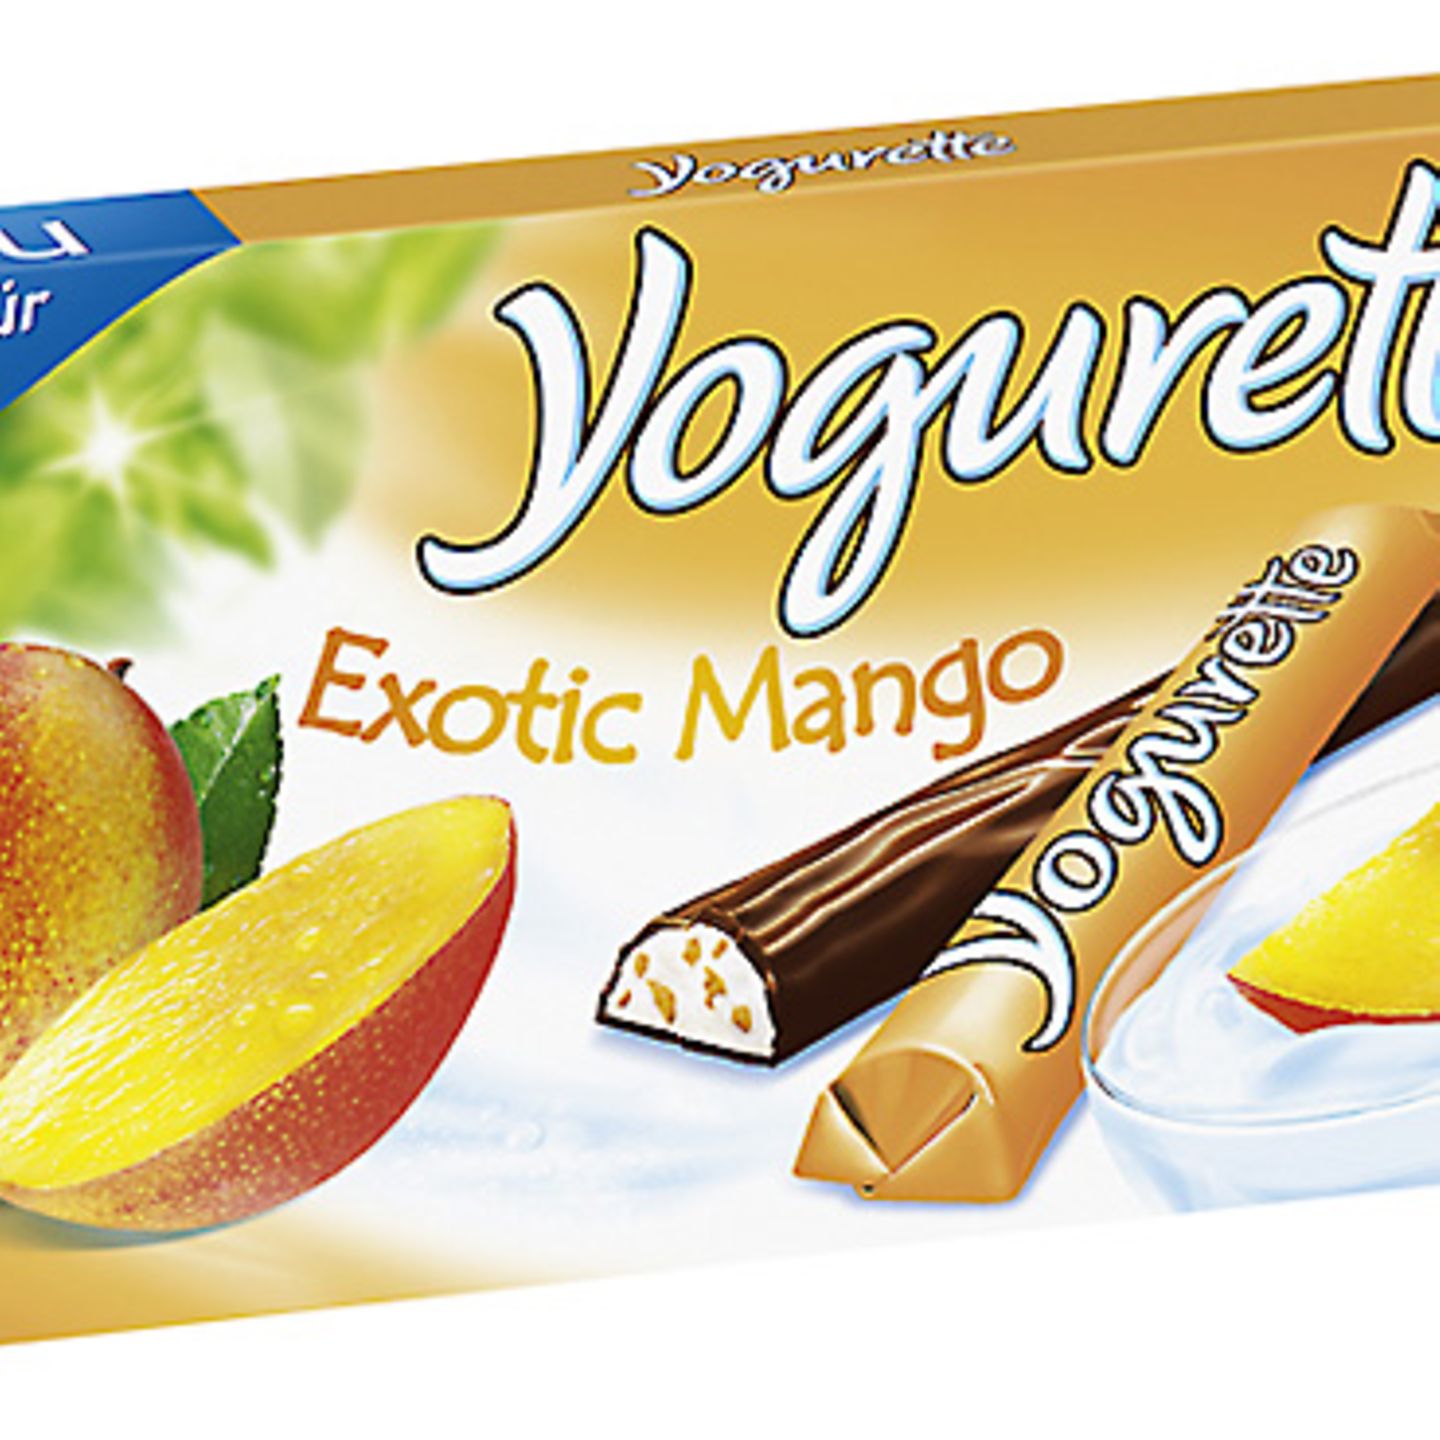 Yogurette "Exotik Mango"